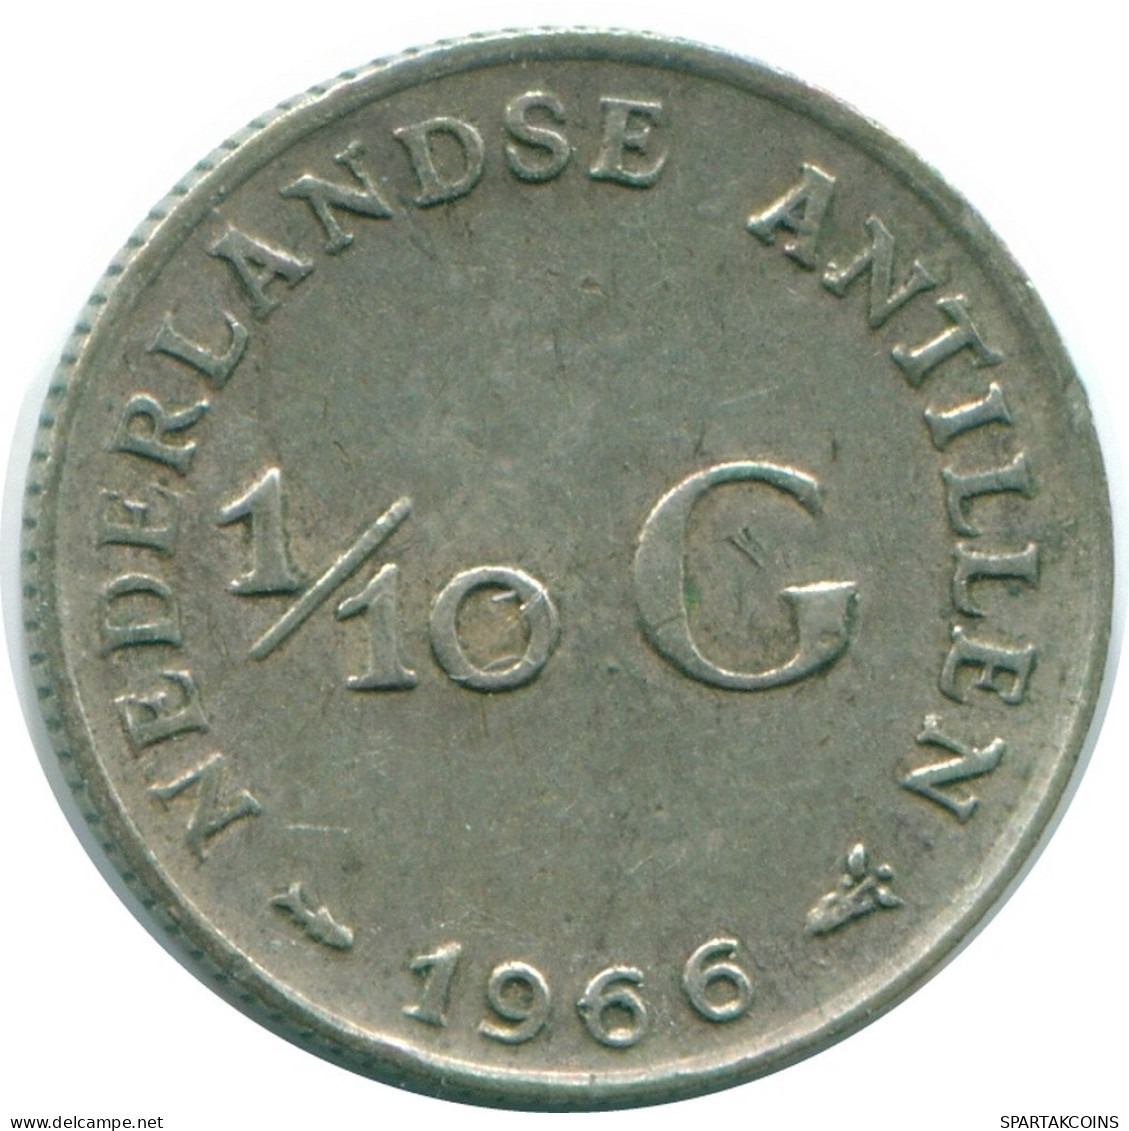 1/10 GULDEN 1966 NETHERLANDS ANTILLES SILVER Colonial Coin #NL12747.3.U.A - Netherlands Antilles